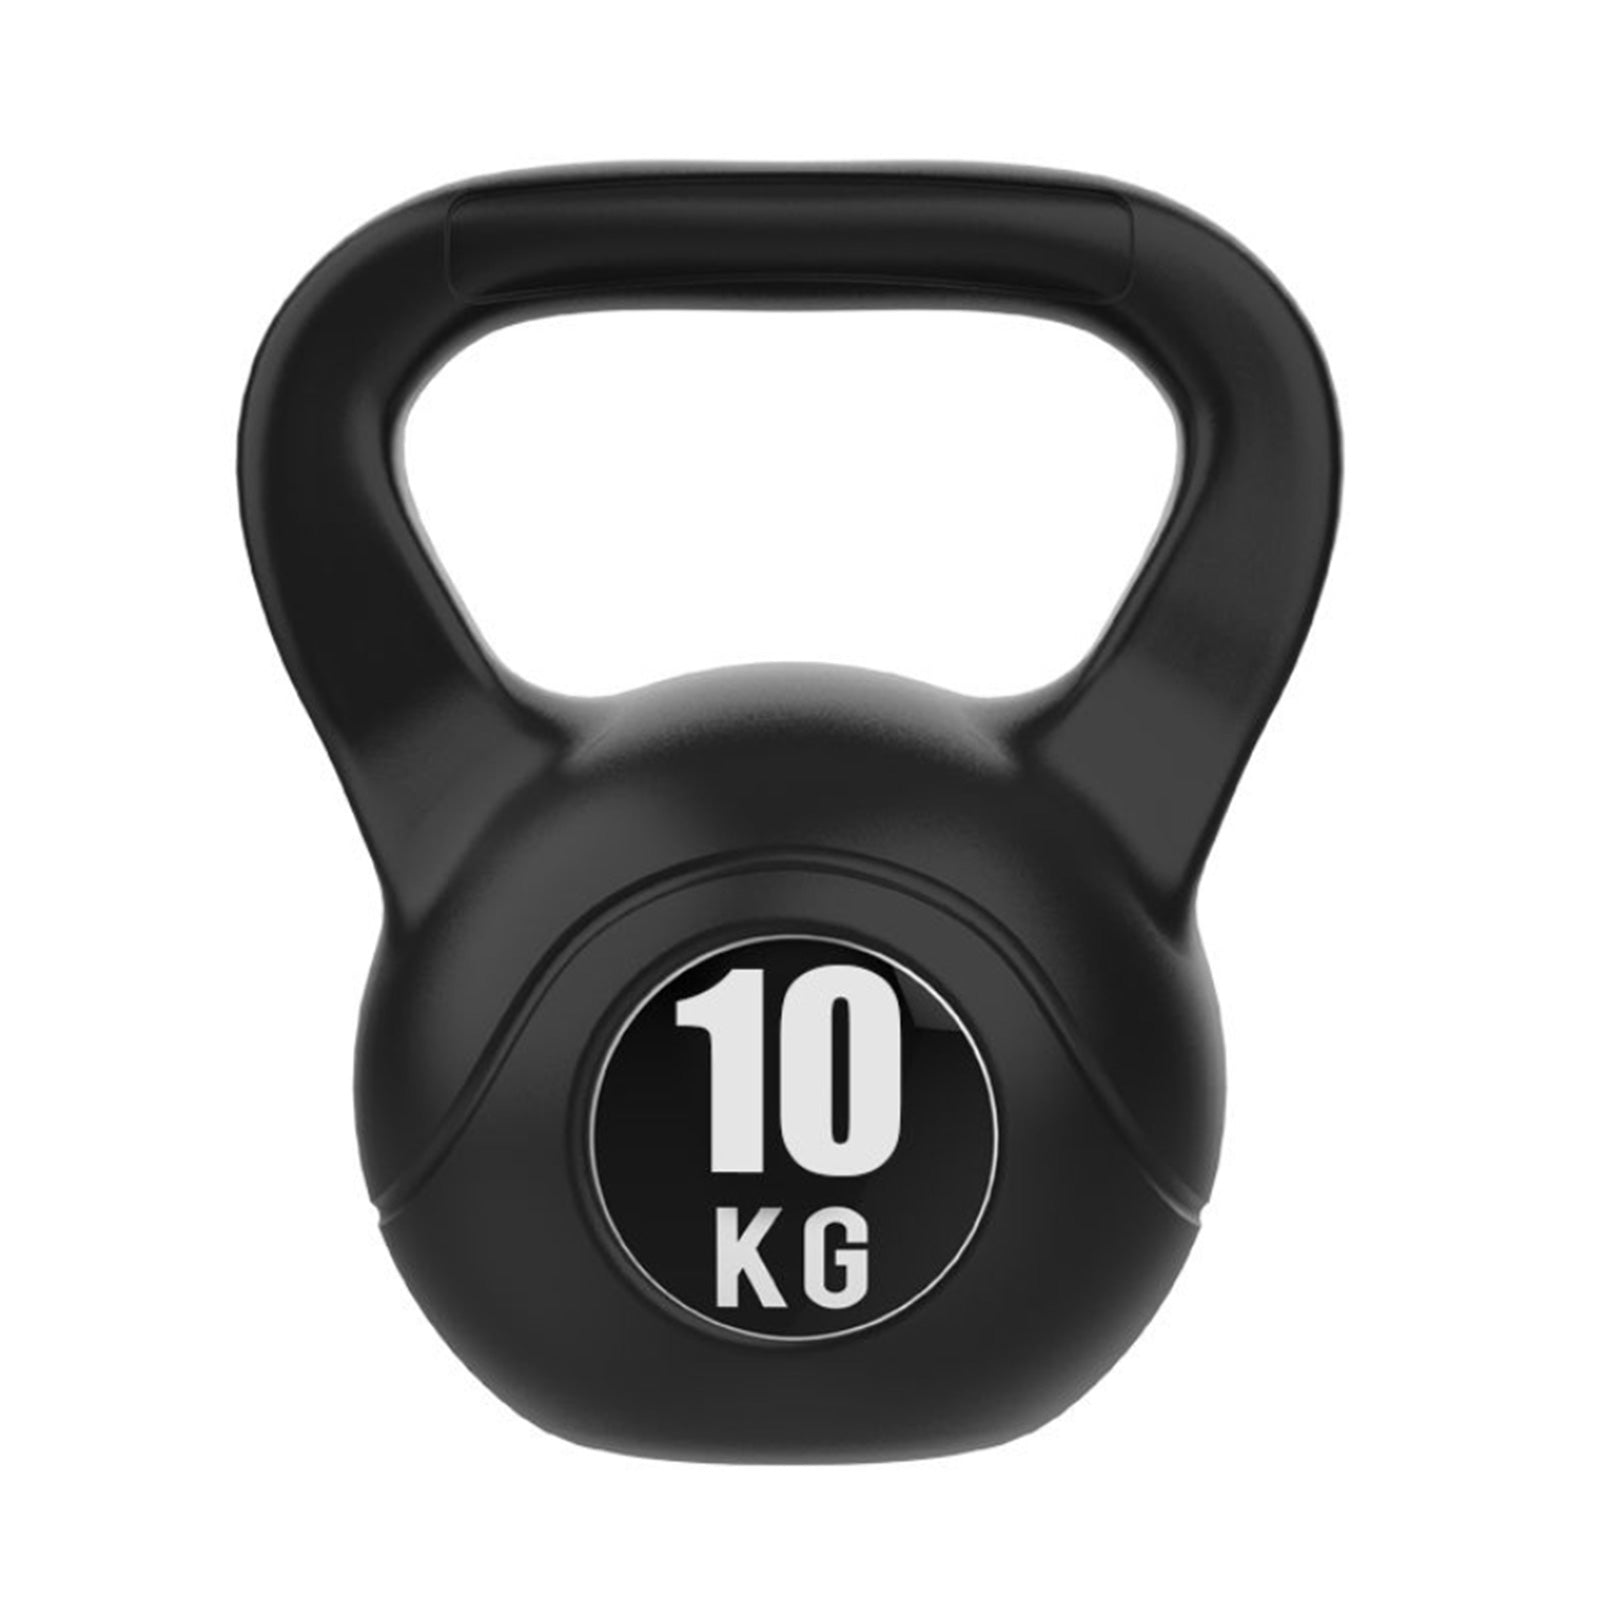 JMQ 4-12KG Kettlebell Kettle Bell Weight Exercise Home Gym Workout - 10KG